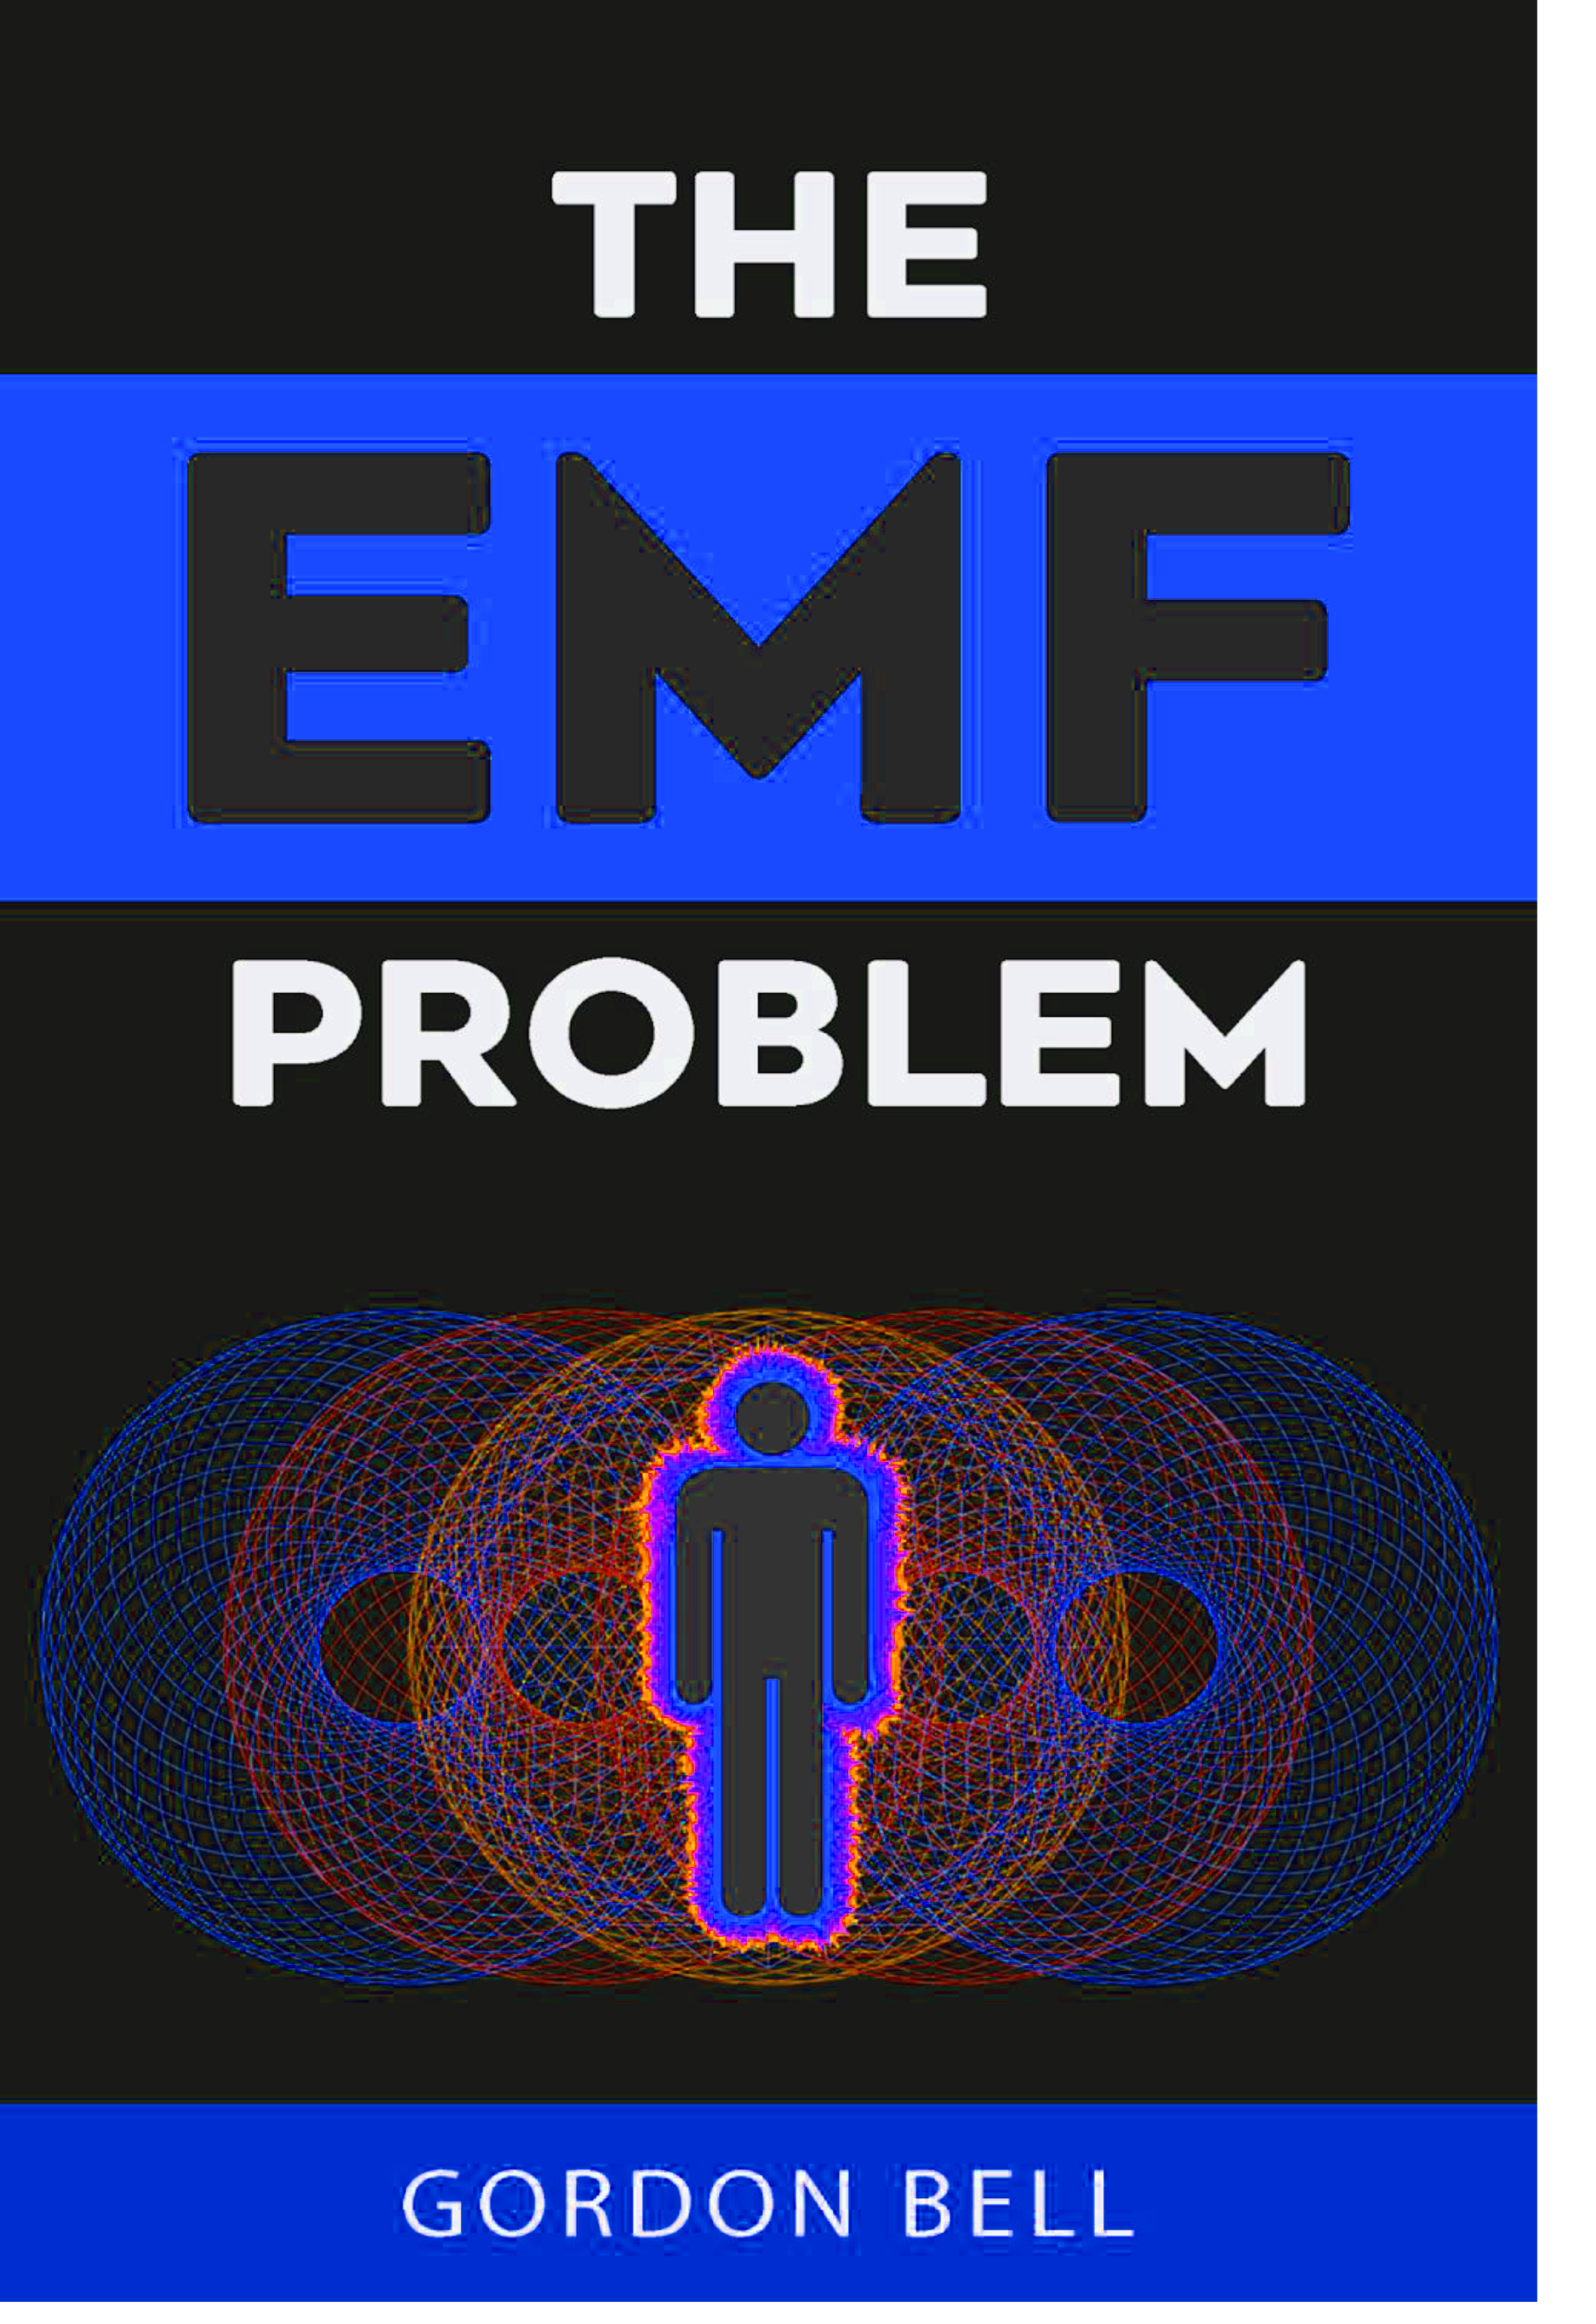 The EMF Problem Book